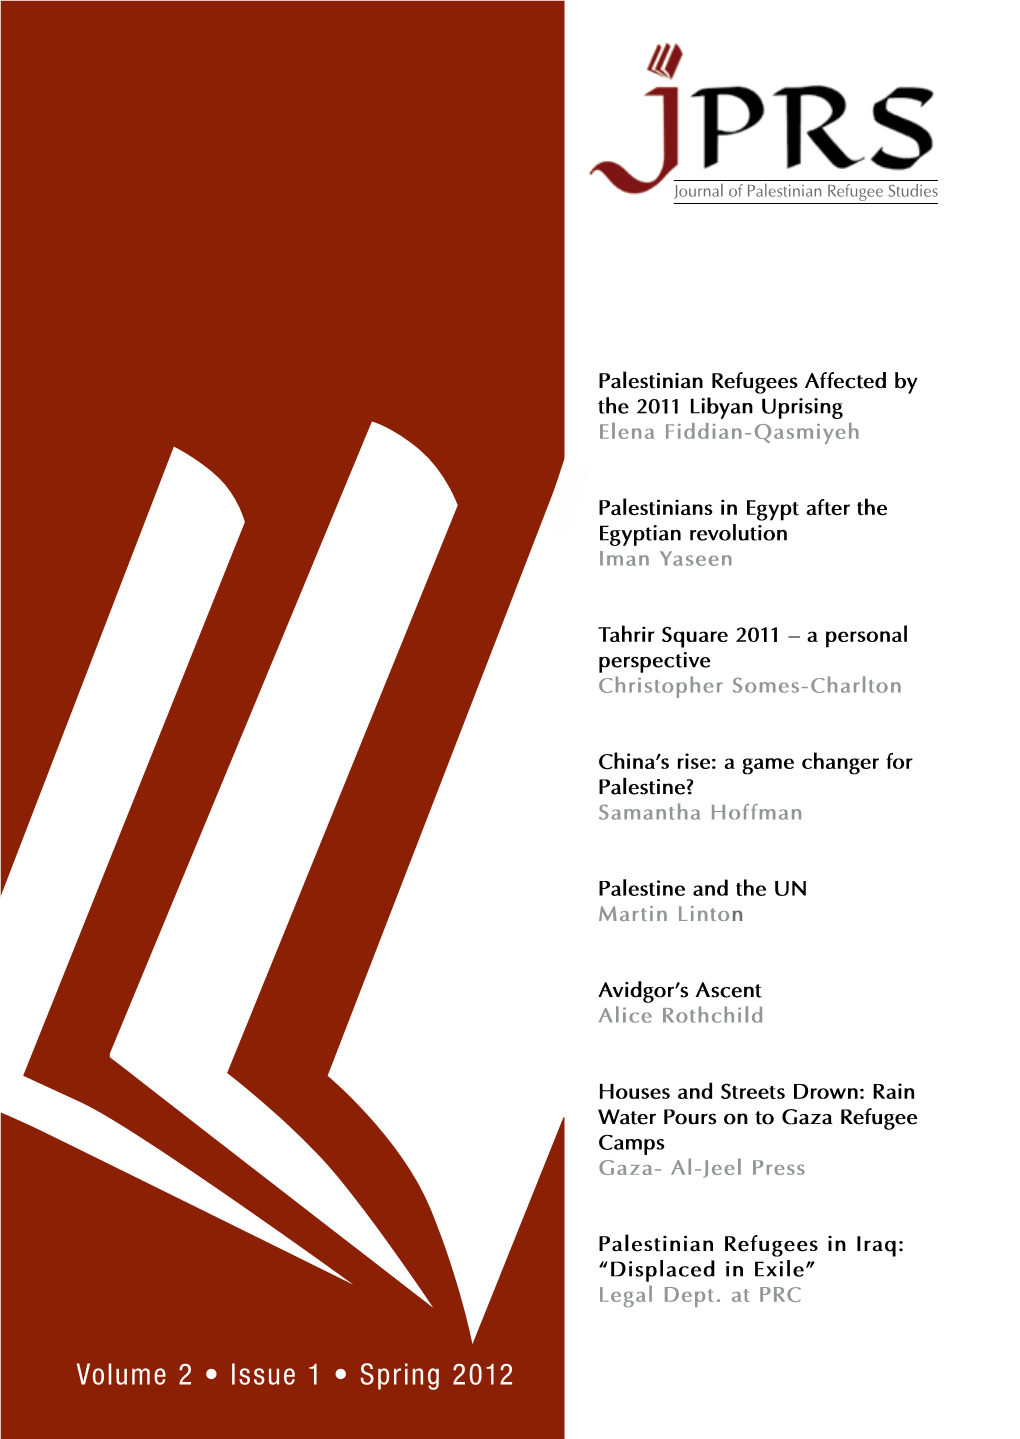 Volume 2 • Issue 1 • Spring 2012 Journal of Palestinian Refugee Studies